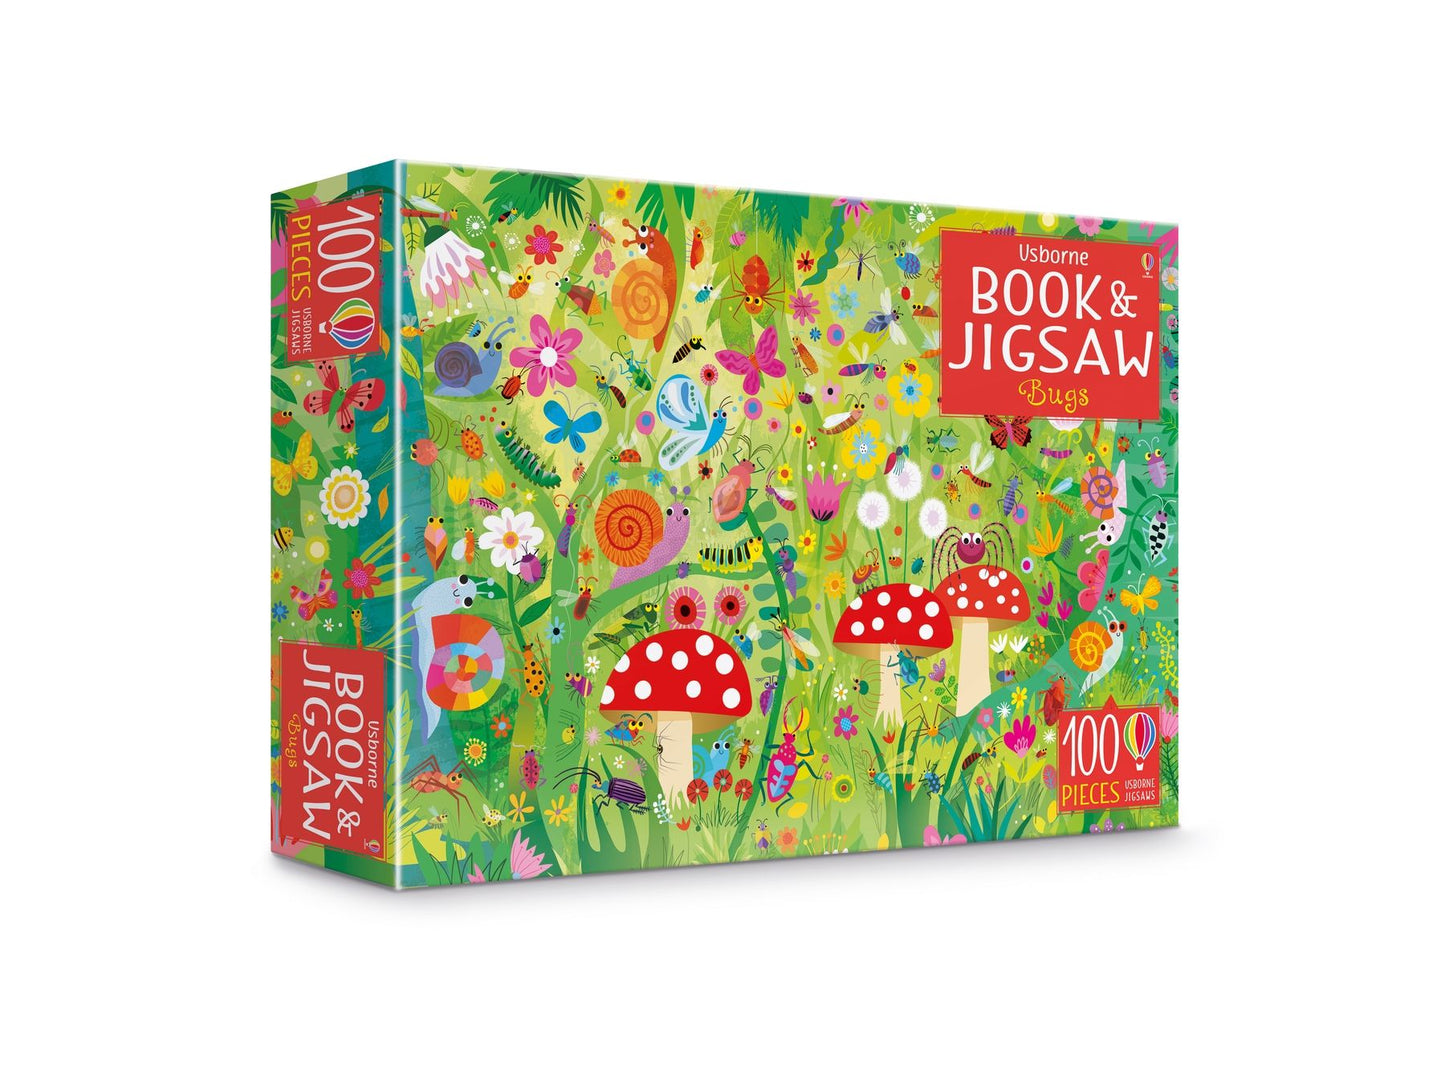 Bugs Book & Jigsaw Puzzle by Usborne